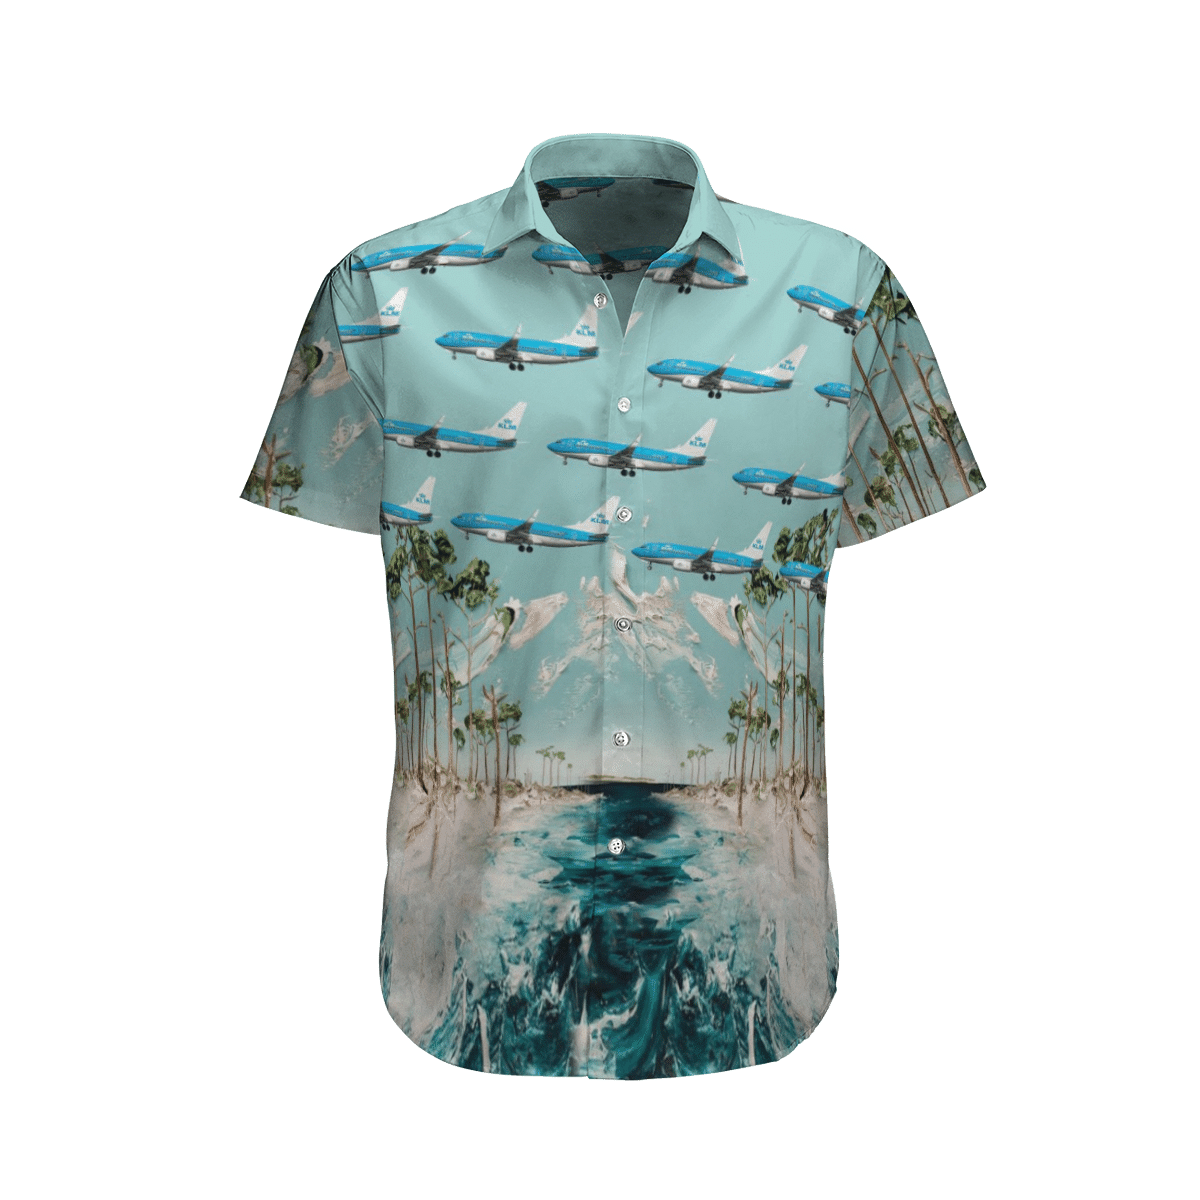 Get a new Hawaiian shirt to enjoy summer vacation 139